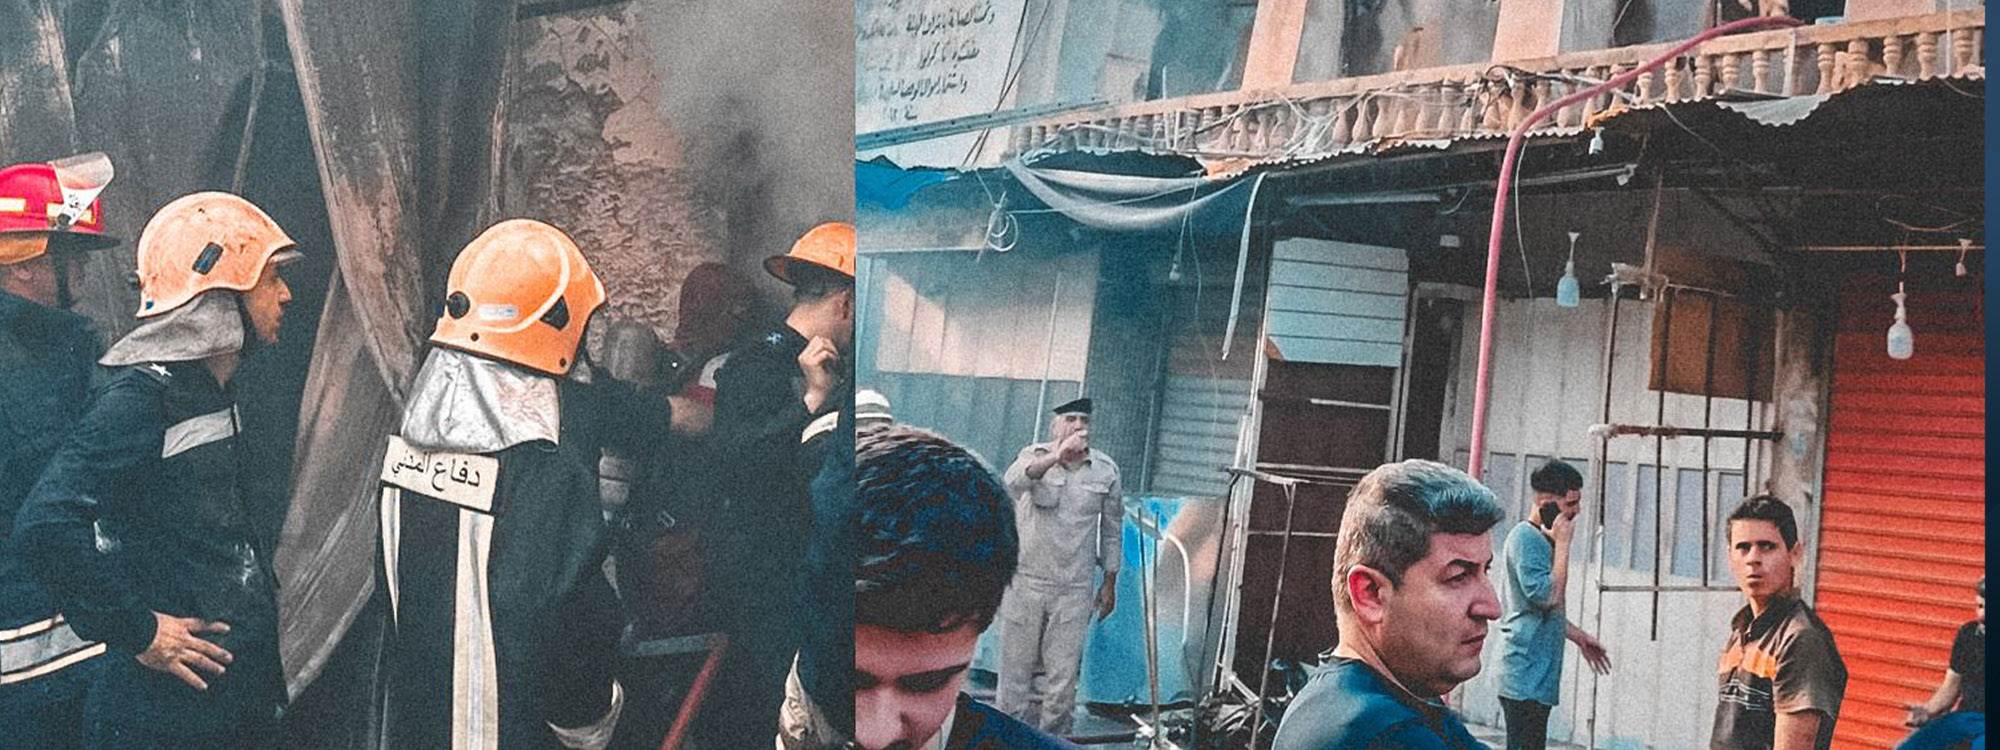 Over 100 shops burned in Kirkuk bazaar fire